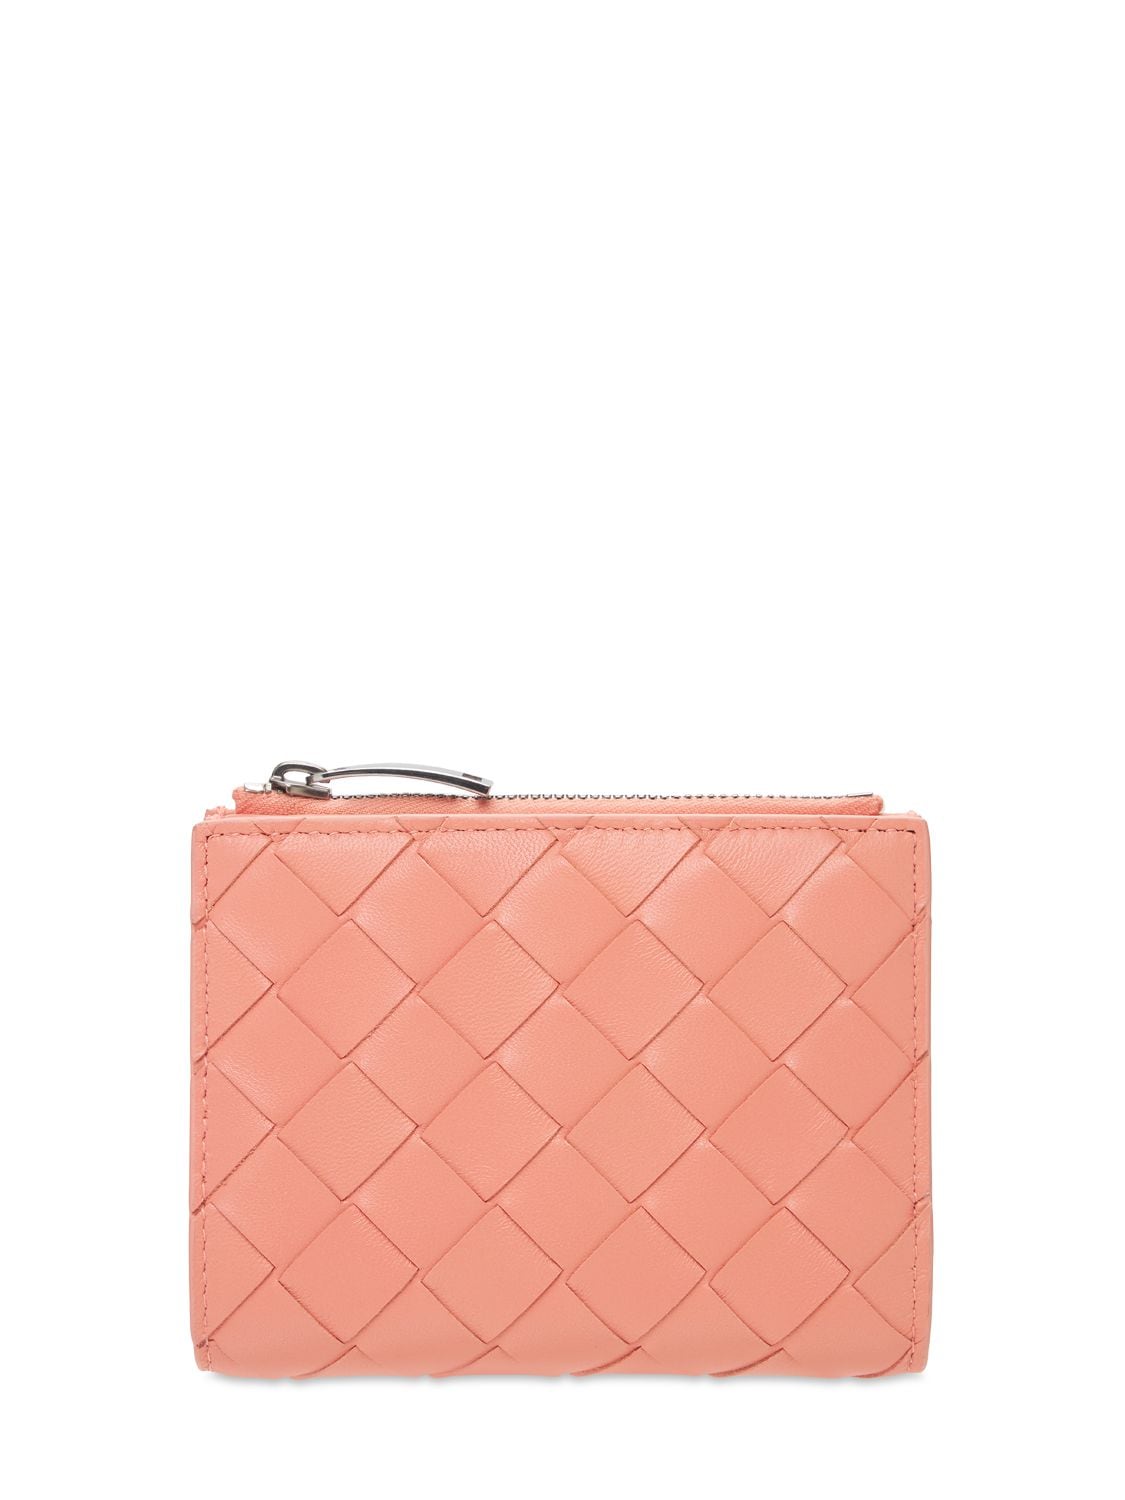 Bottega Veneta Womens Peachy Intrecciato Small Leather Bi-fold Wallet